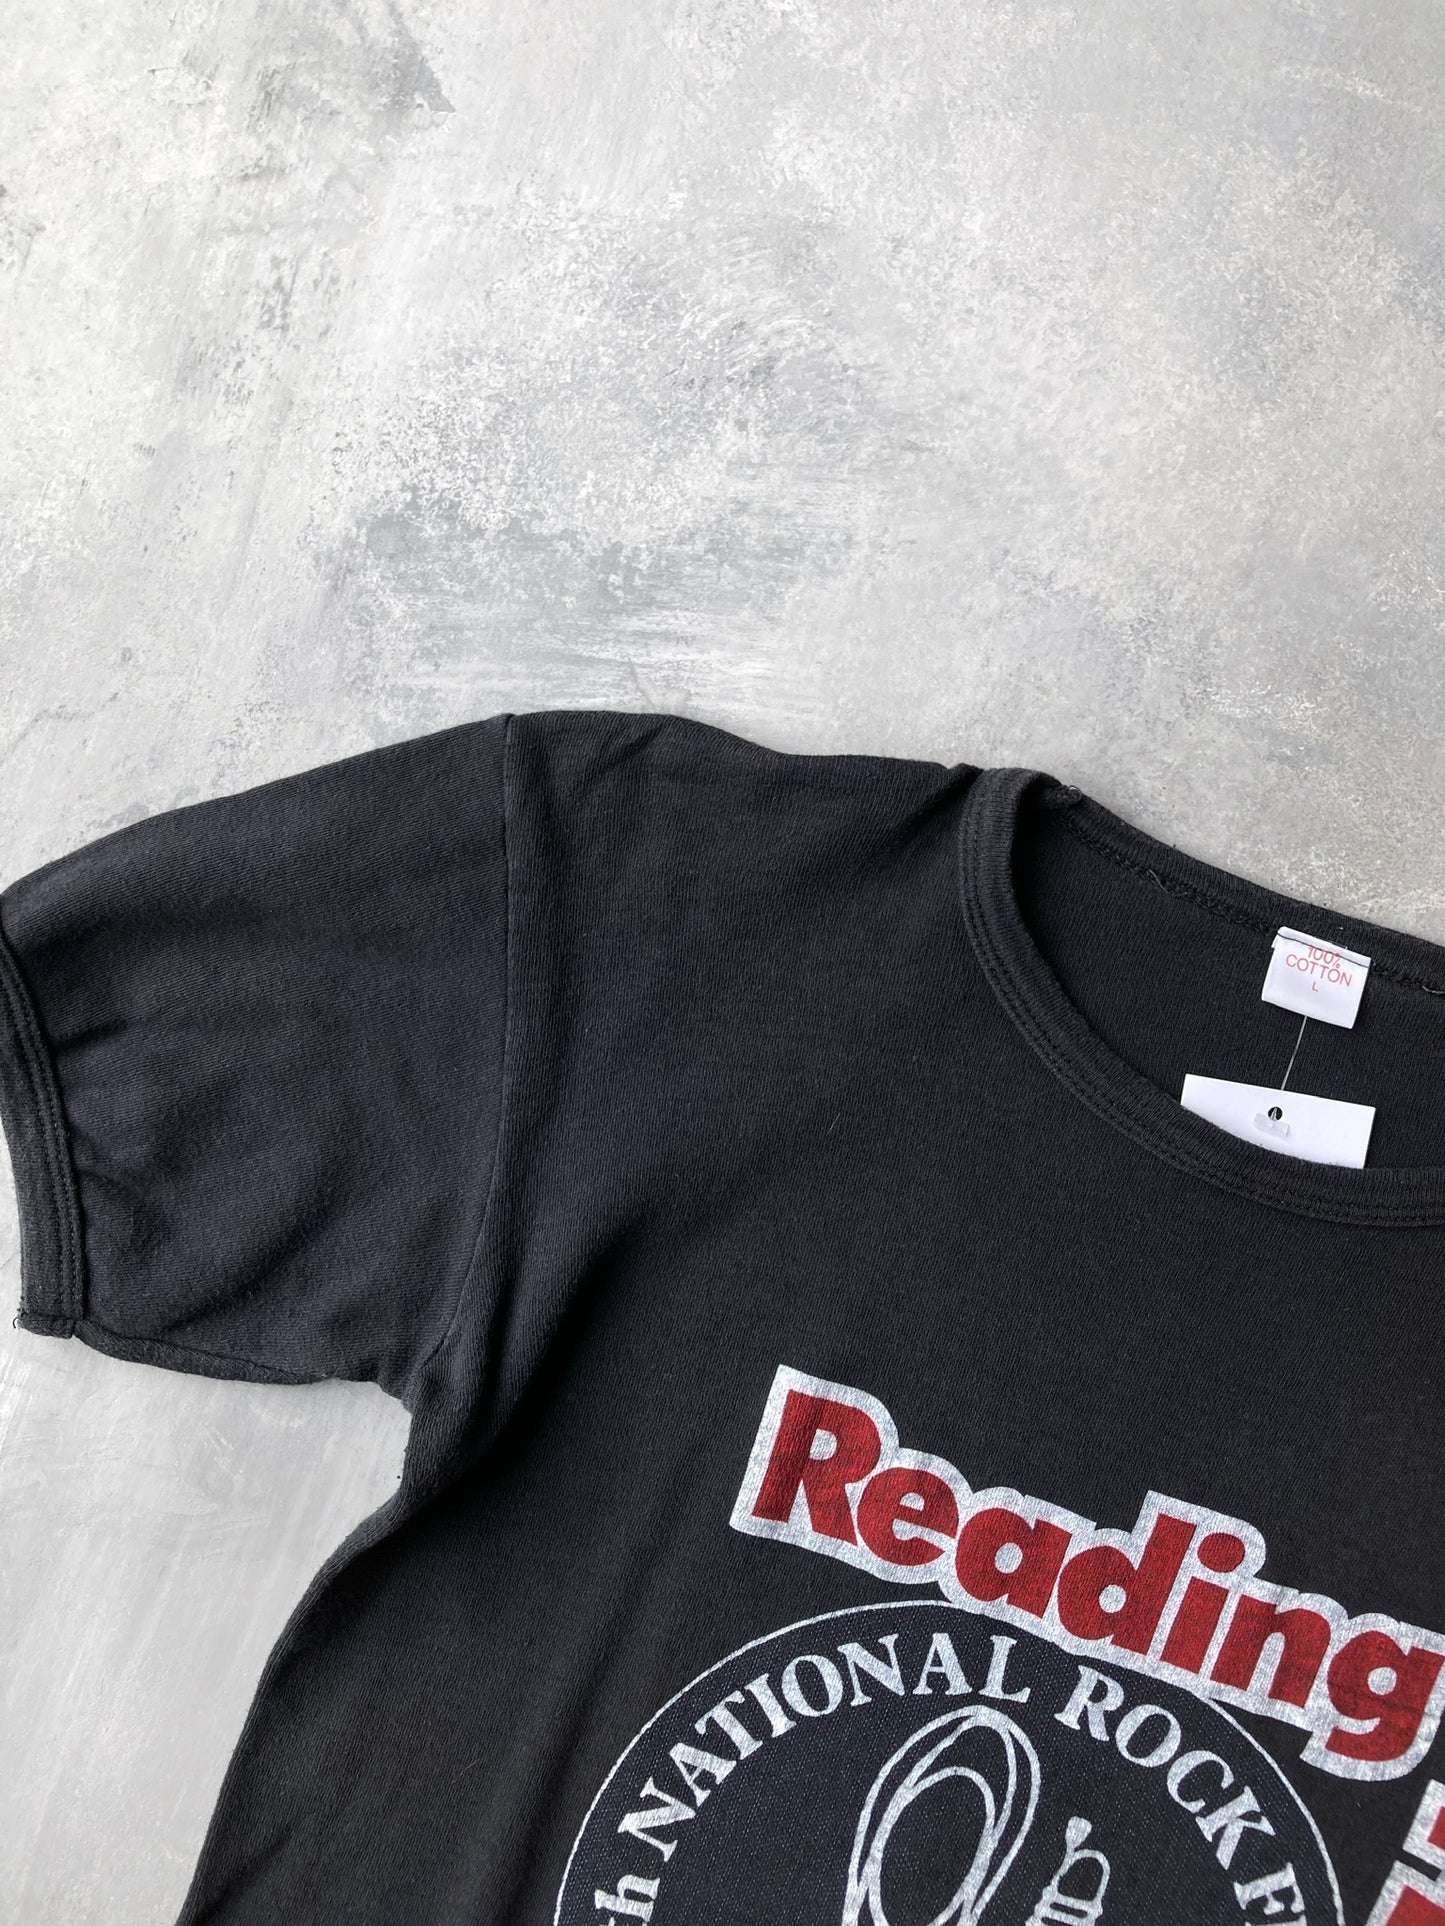 Reading Festival T-Shirt '87 - Small